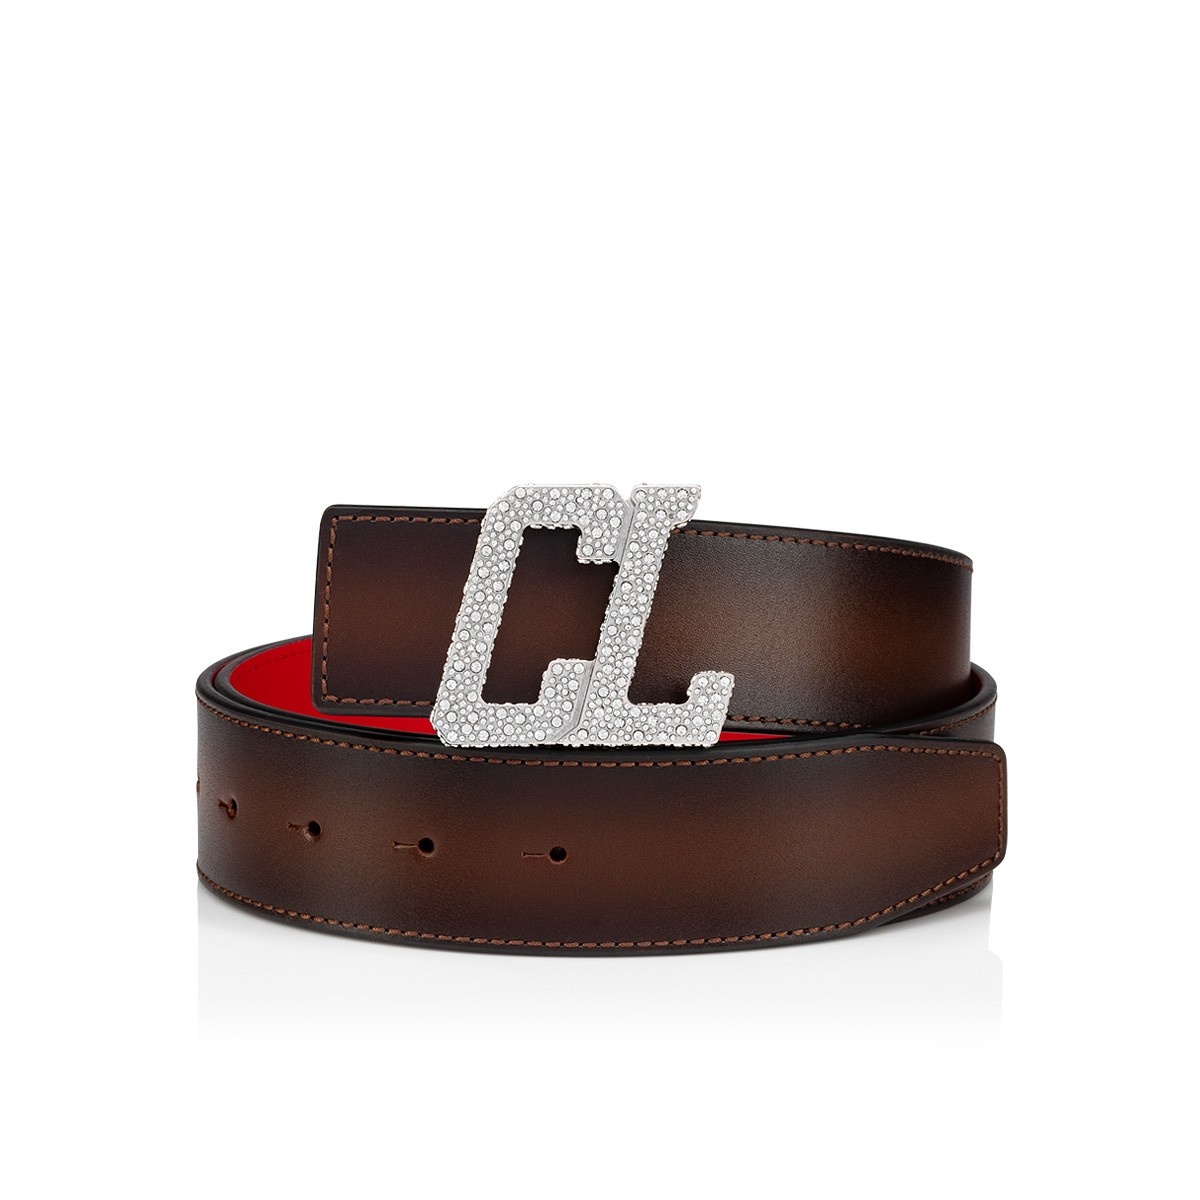 Happy Rui CL Logo belt buckle - 8